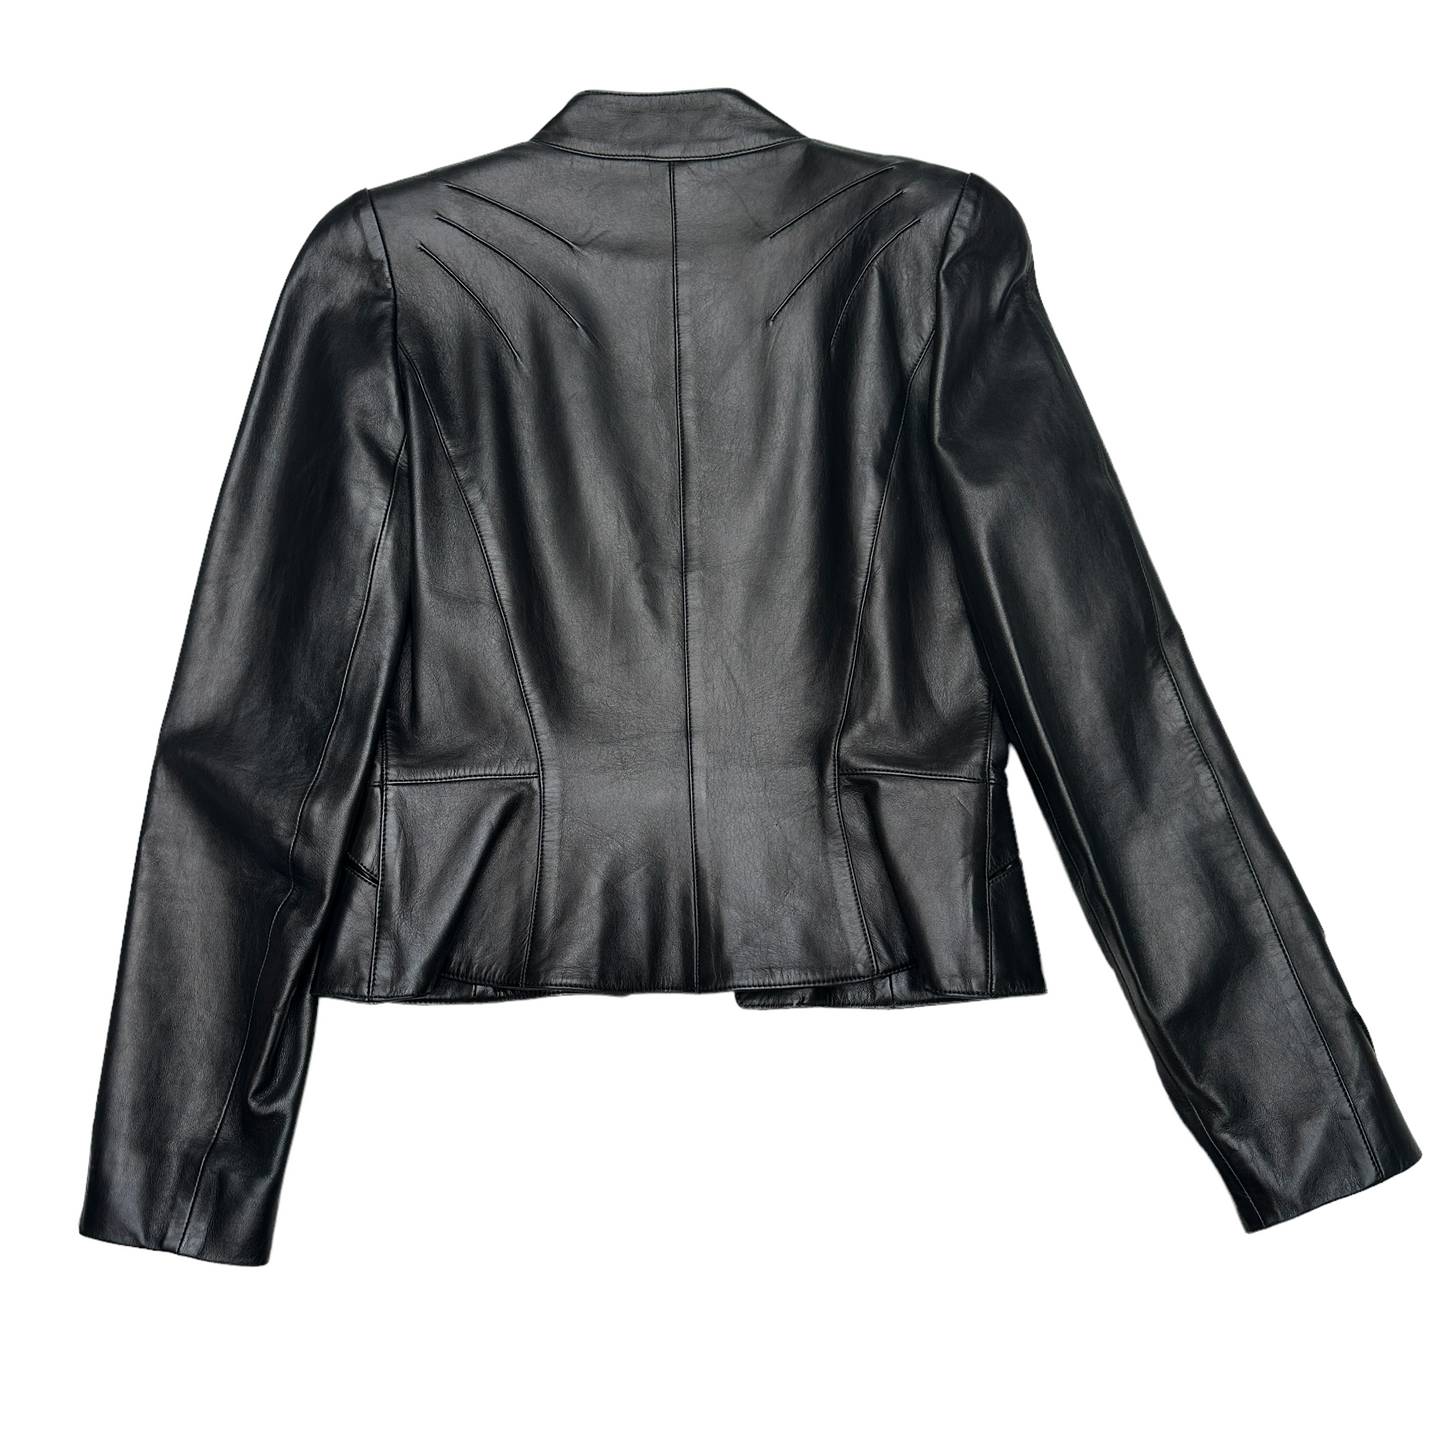 Vintage Black Leather Jacket - M